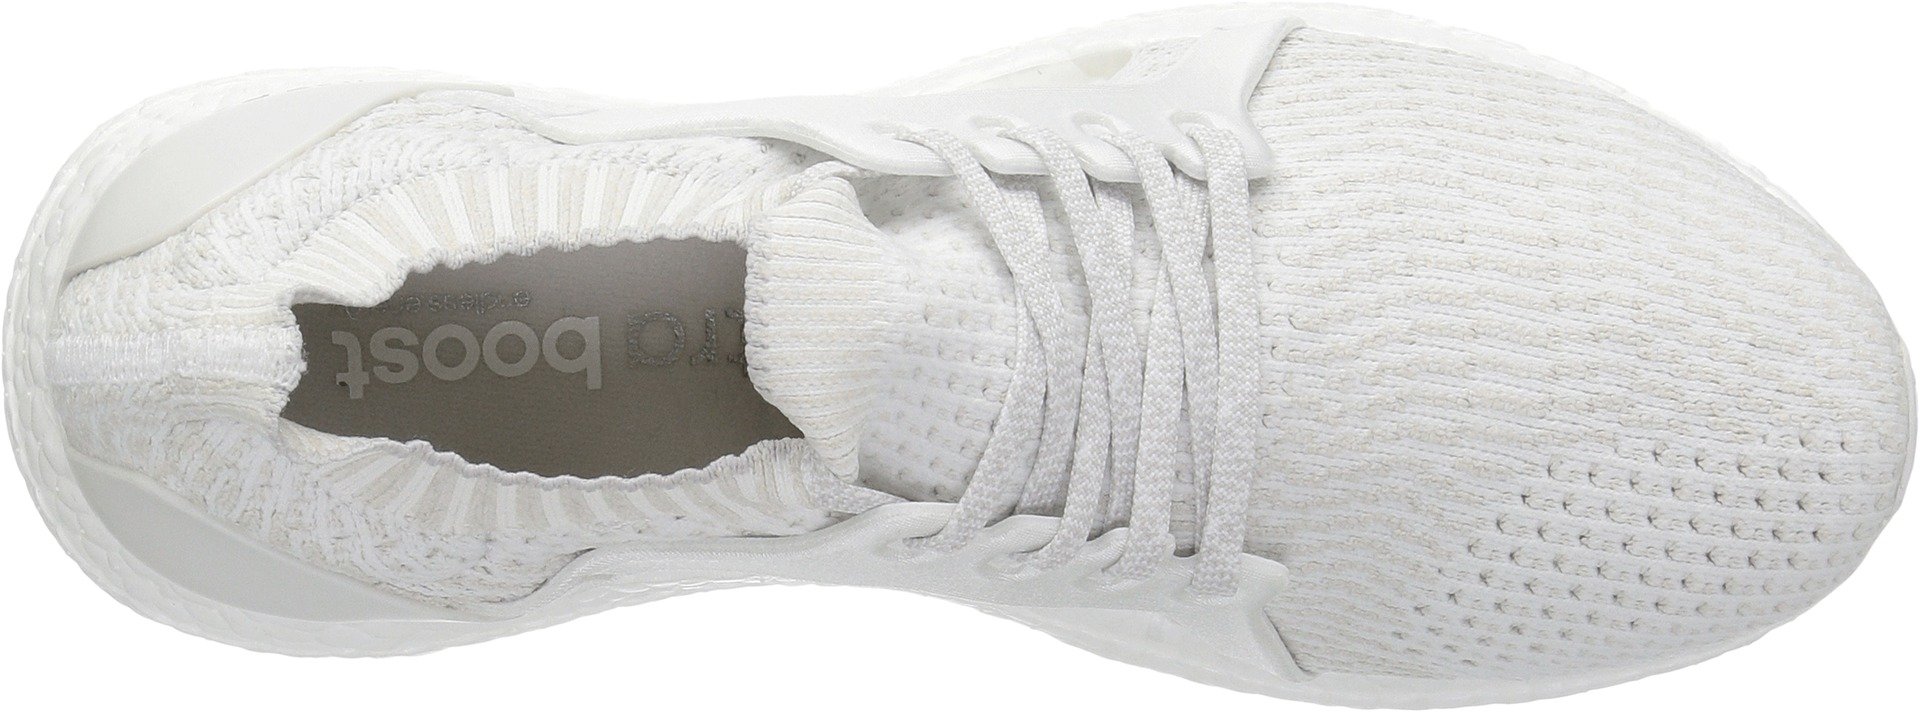 adidas Women's Ultraboost X Running Shoe, White/Crystal White/Grey, 11